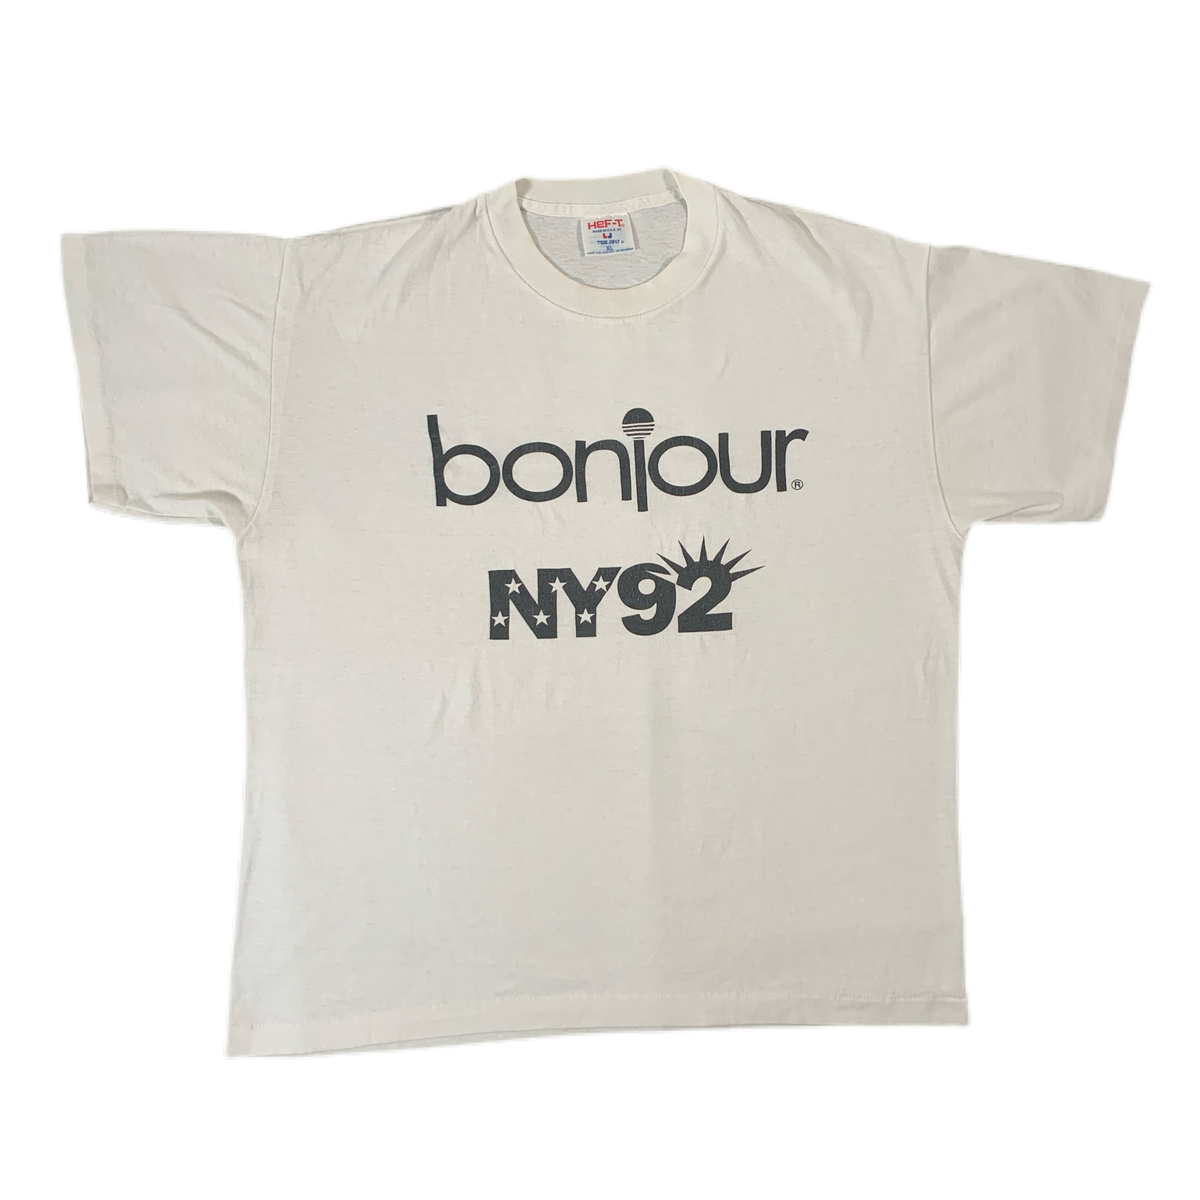 Vintage Original Bonjour NY92 T-Shirt